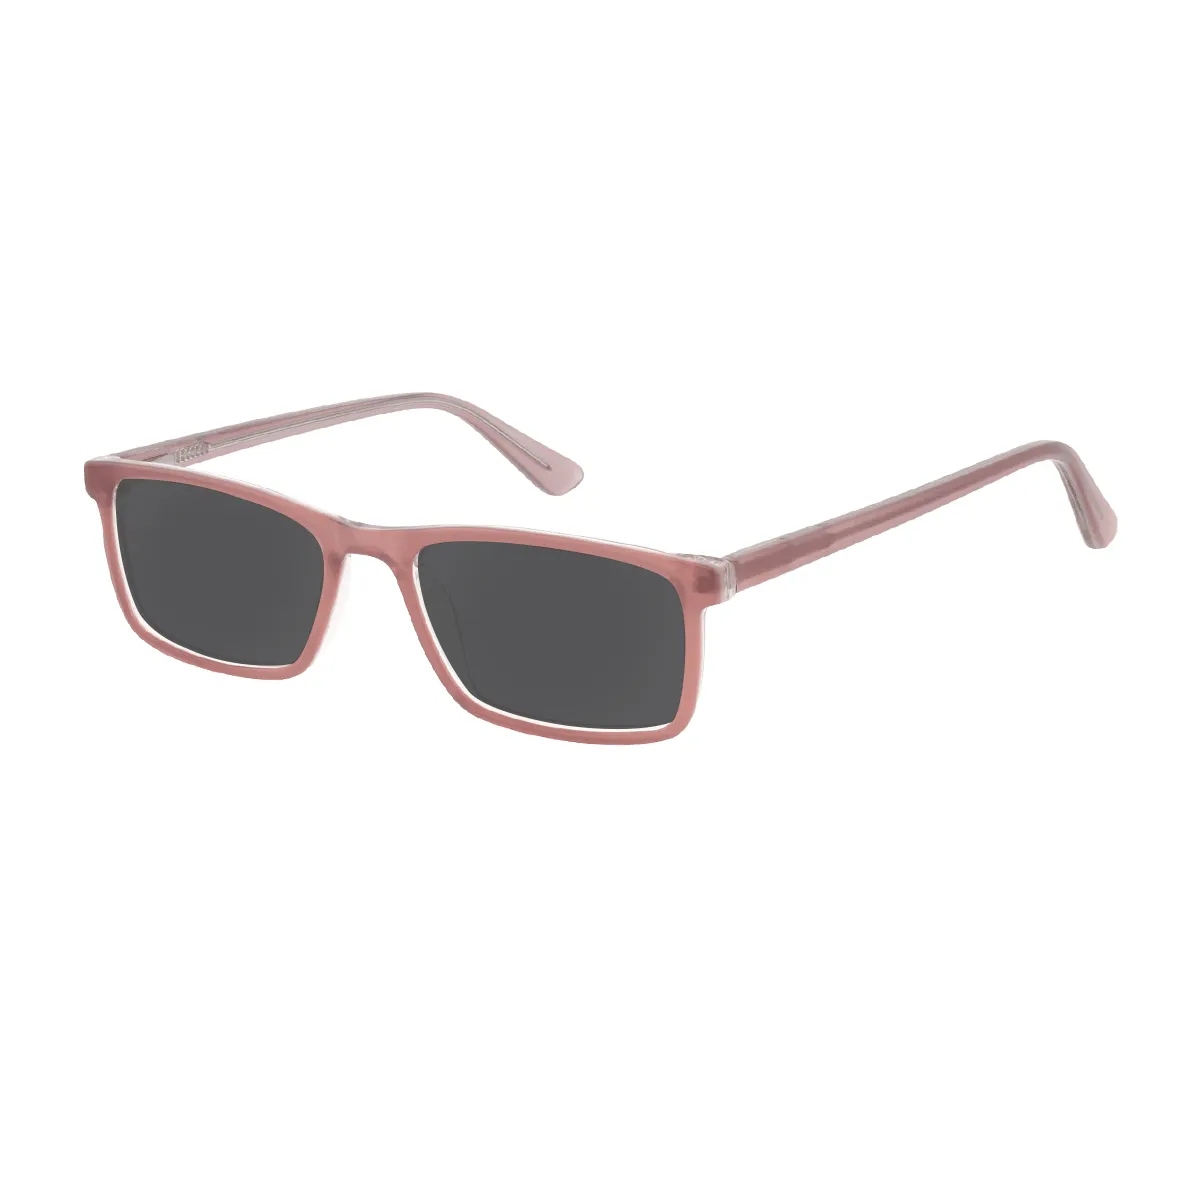 Mullins - Rectangle Pink Sunglasses for Men & Women